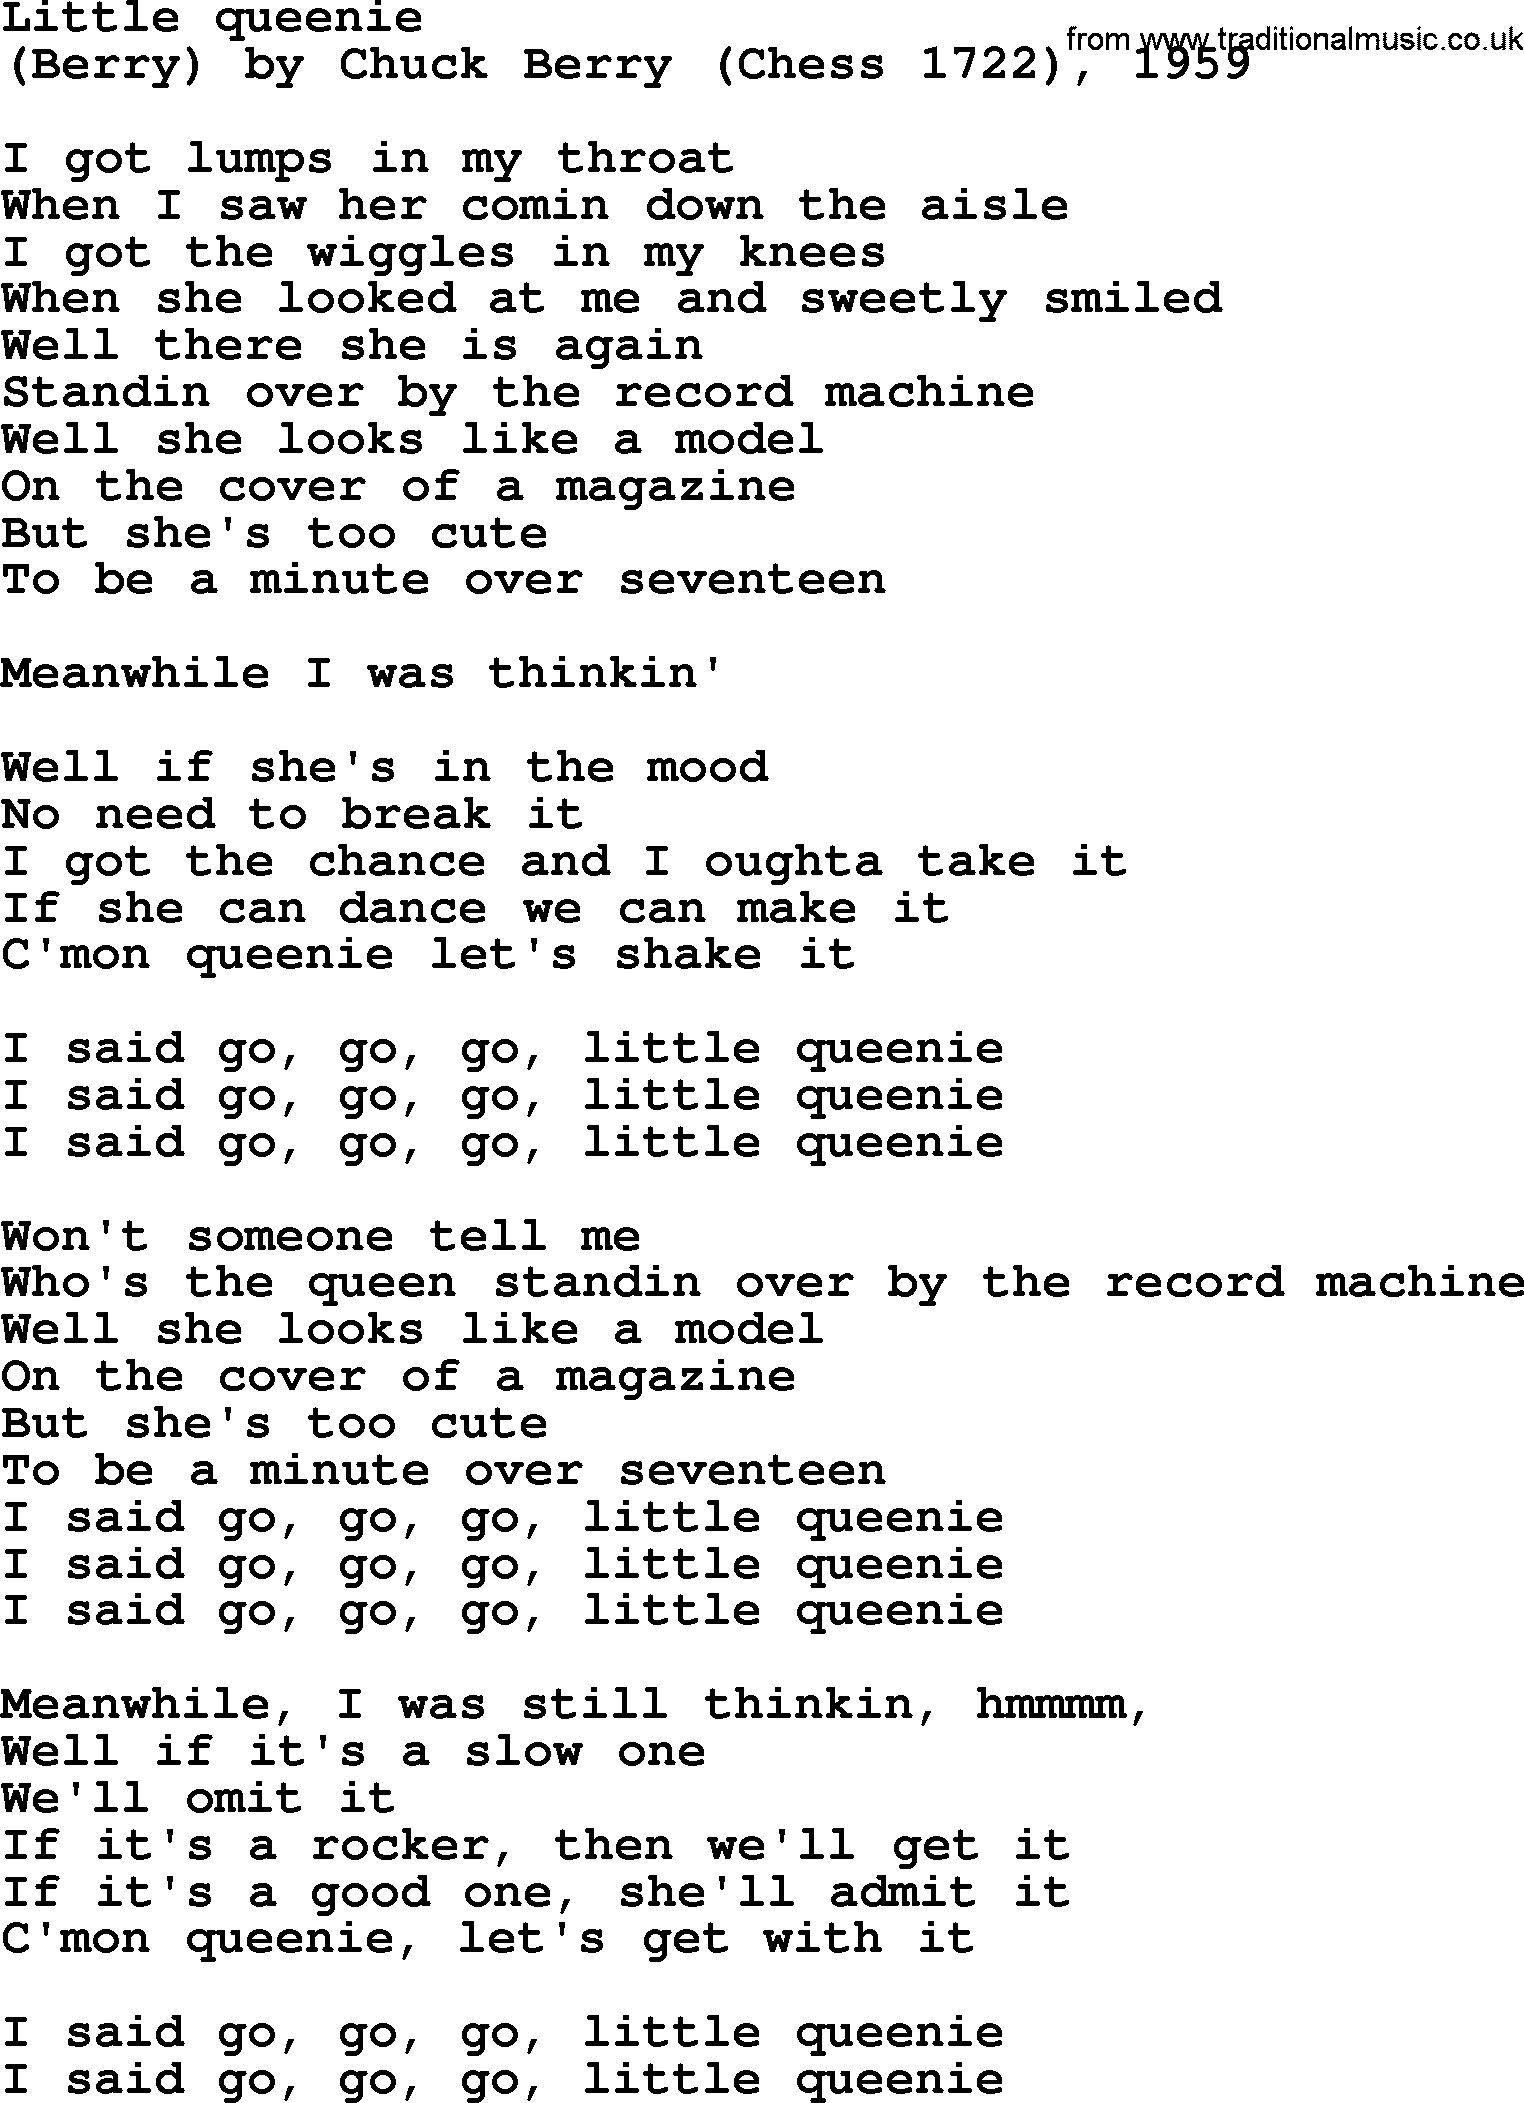 Bruce Springsteen song: Little Queenie lyrics